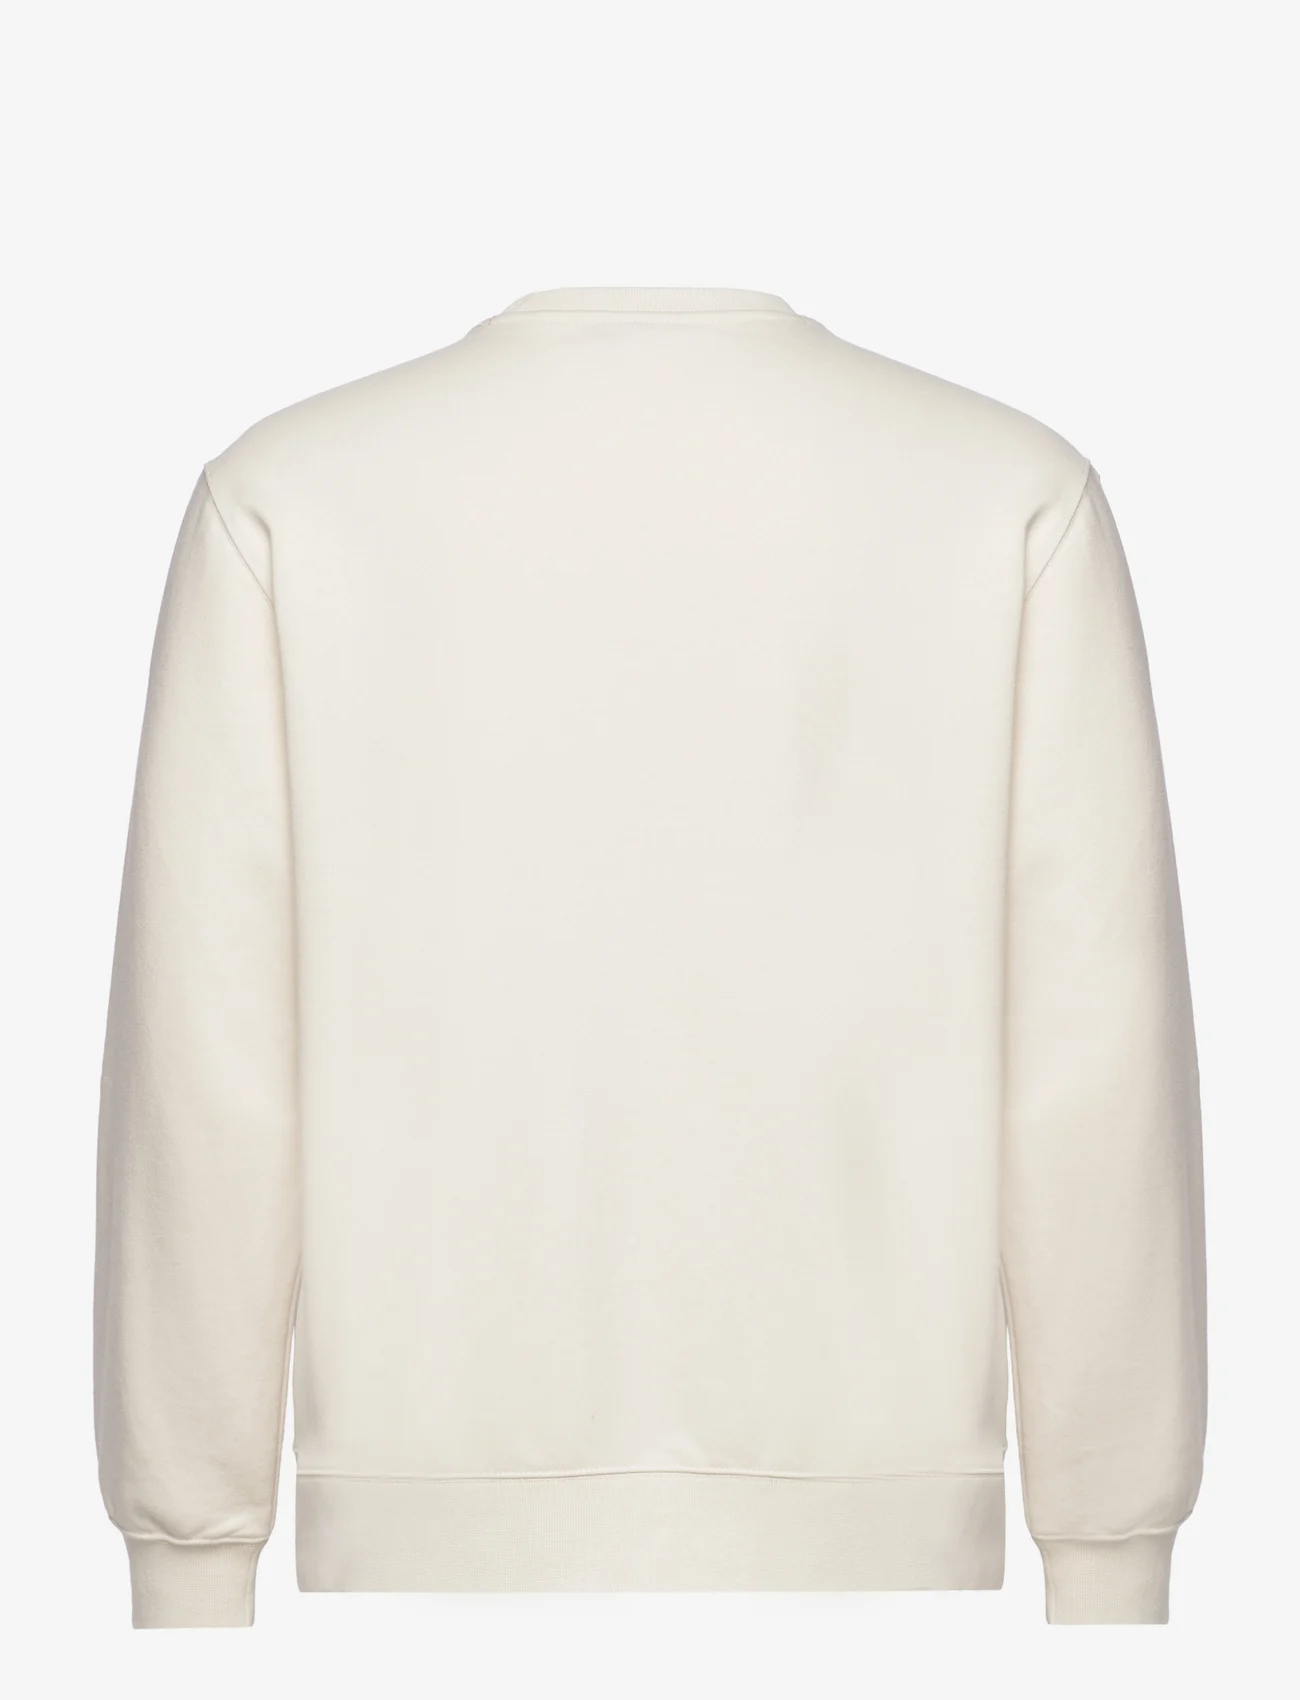 Champion - Crewneck Sweatshirt - huvtröjor - whitecap gray - 1